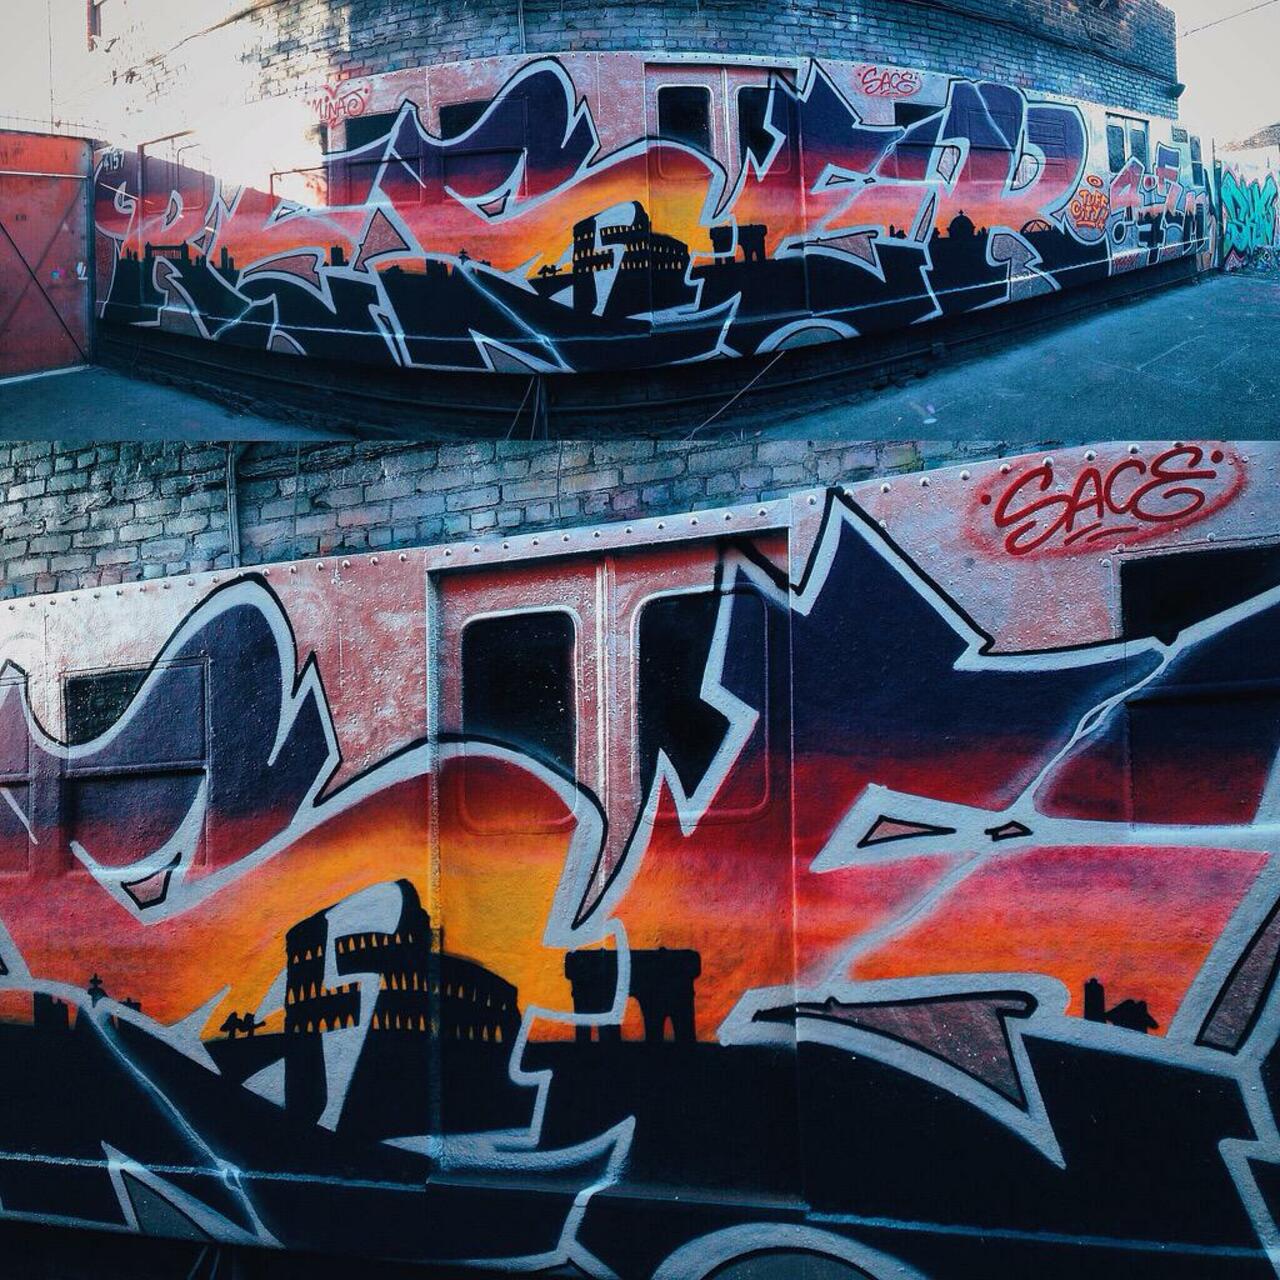 My big brother spacca tutto! Grazie Per la dedica. #TuffCity #Bronx #NewYork #Resek #Re47 #Graffiti #StreetArt http://t.co/cVNCoF2FVv